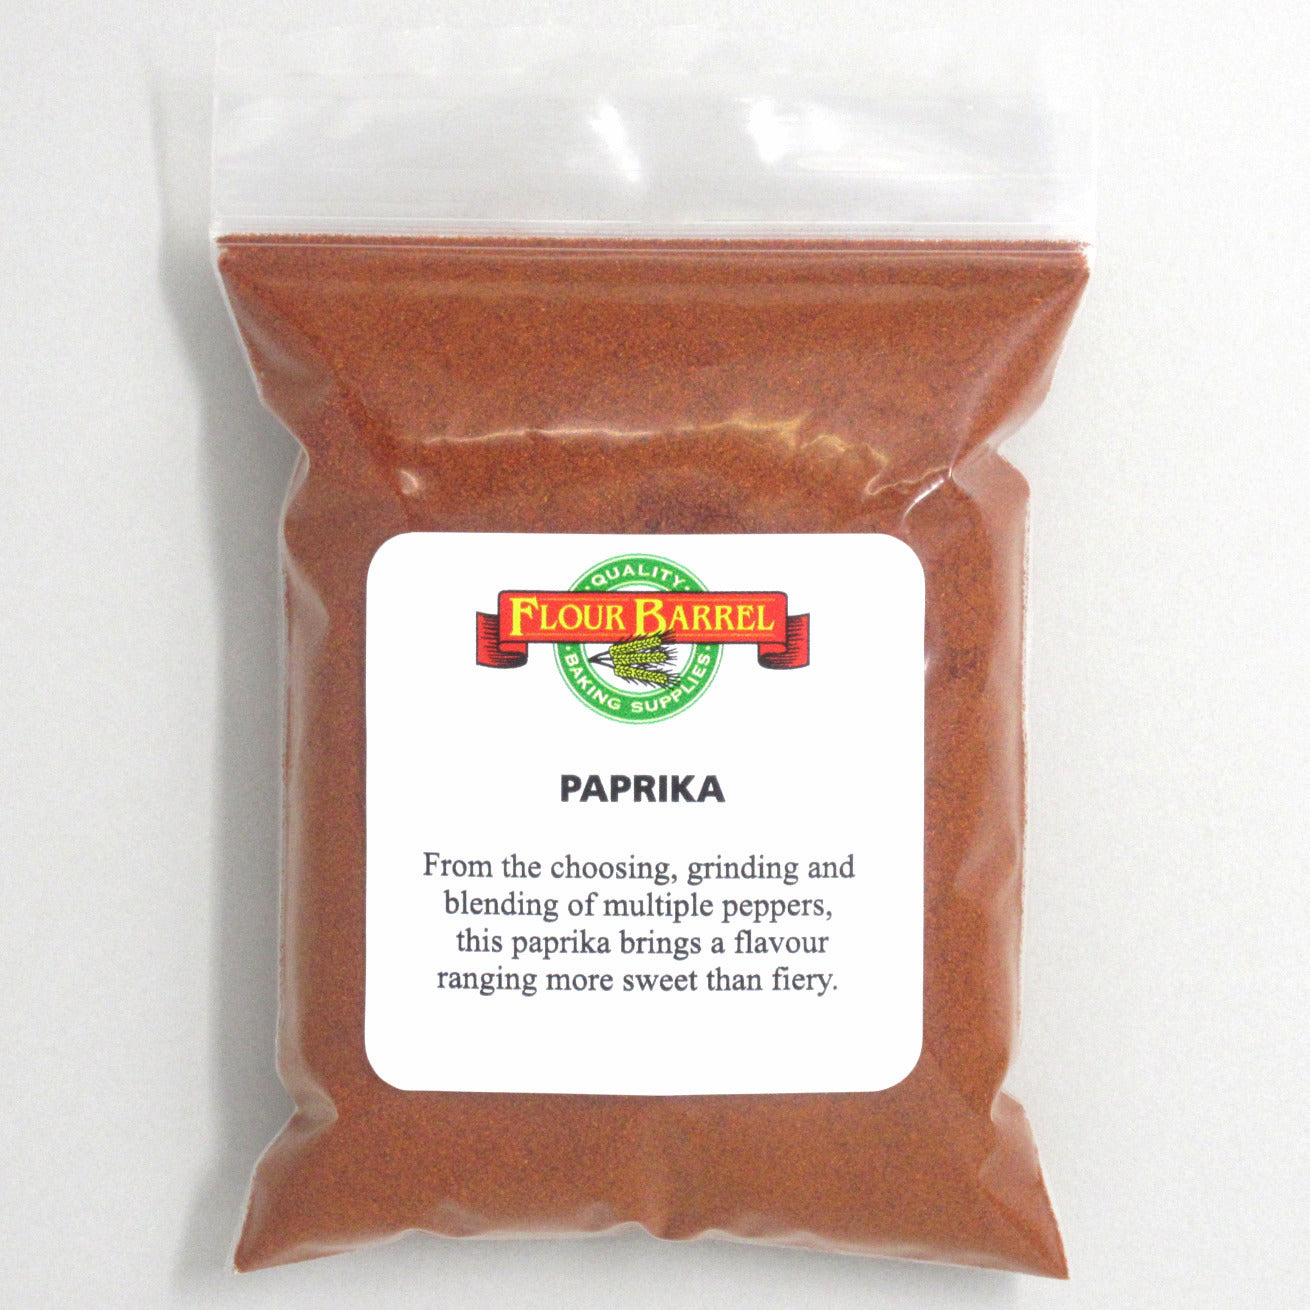 Flour Barrel product image - Paprika